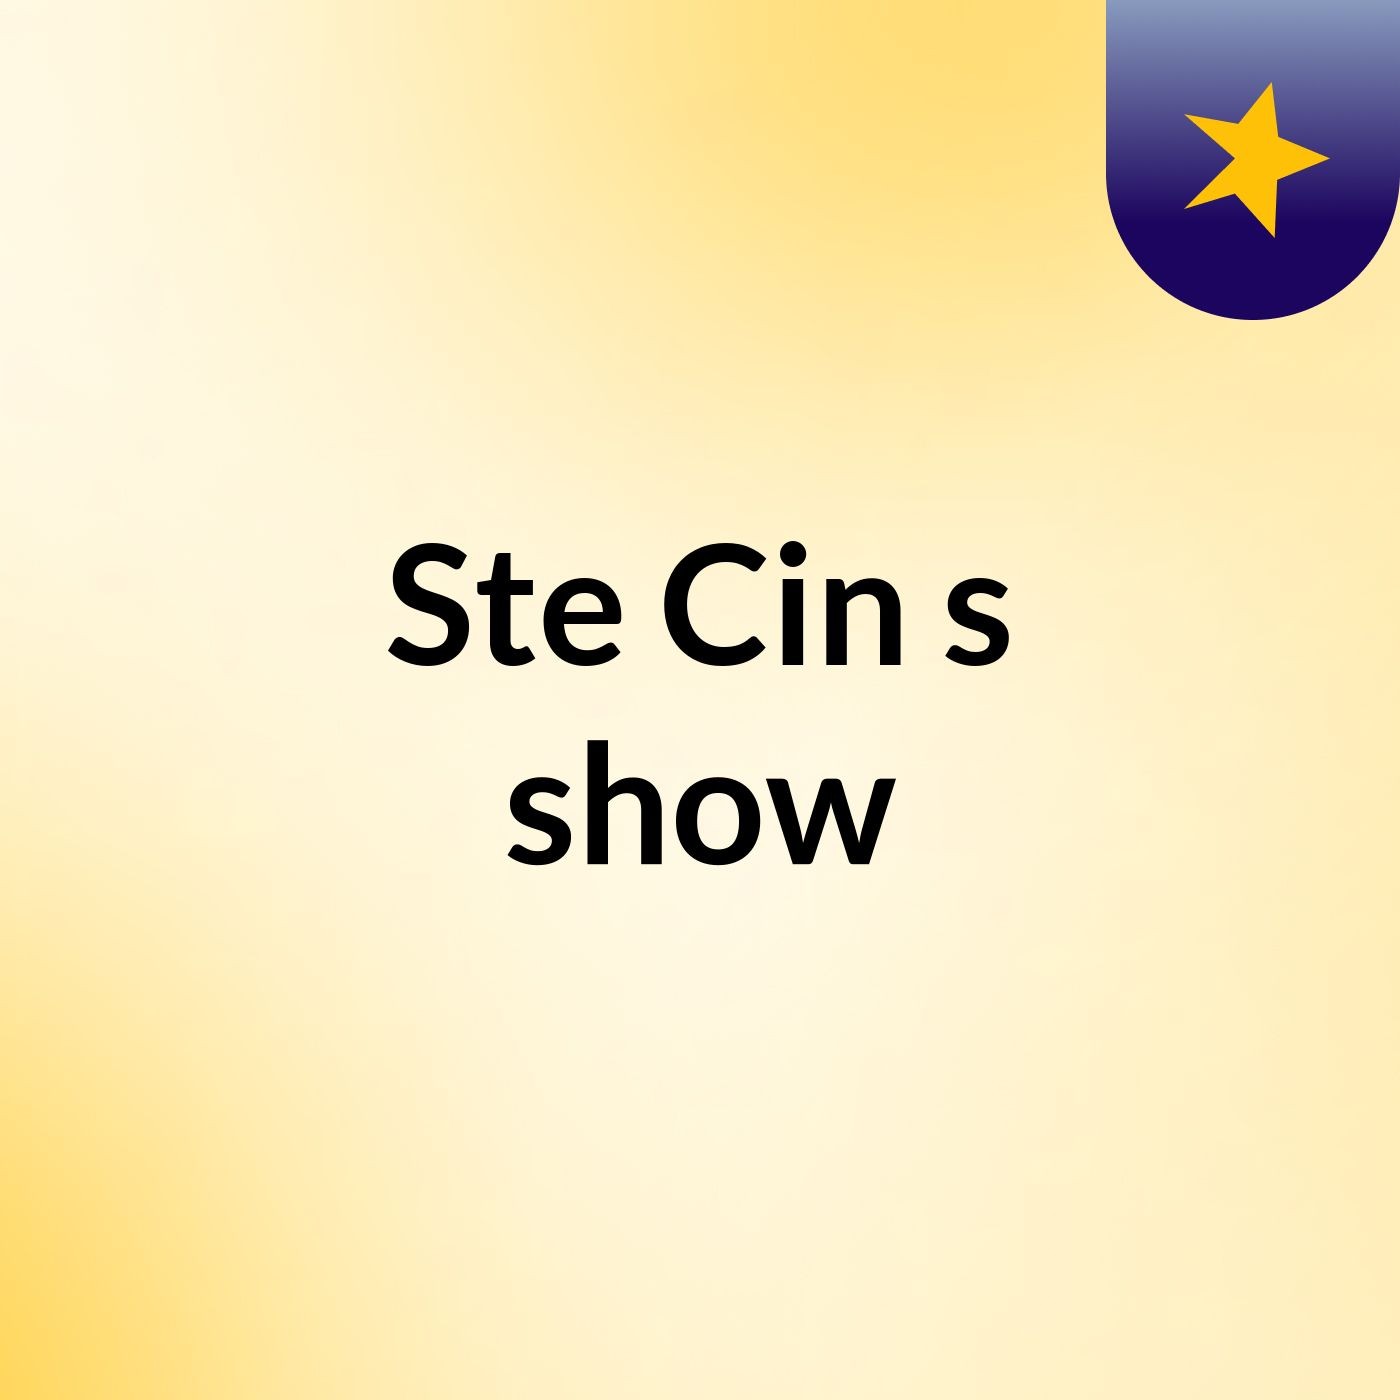 Ste Cin's show